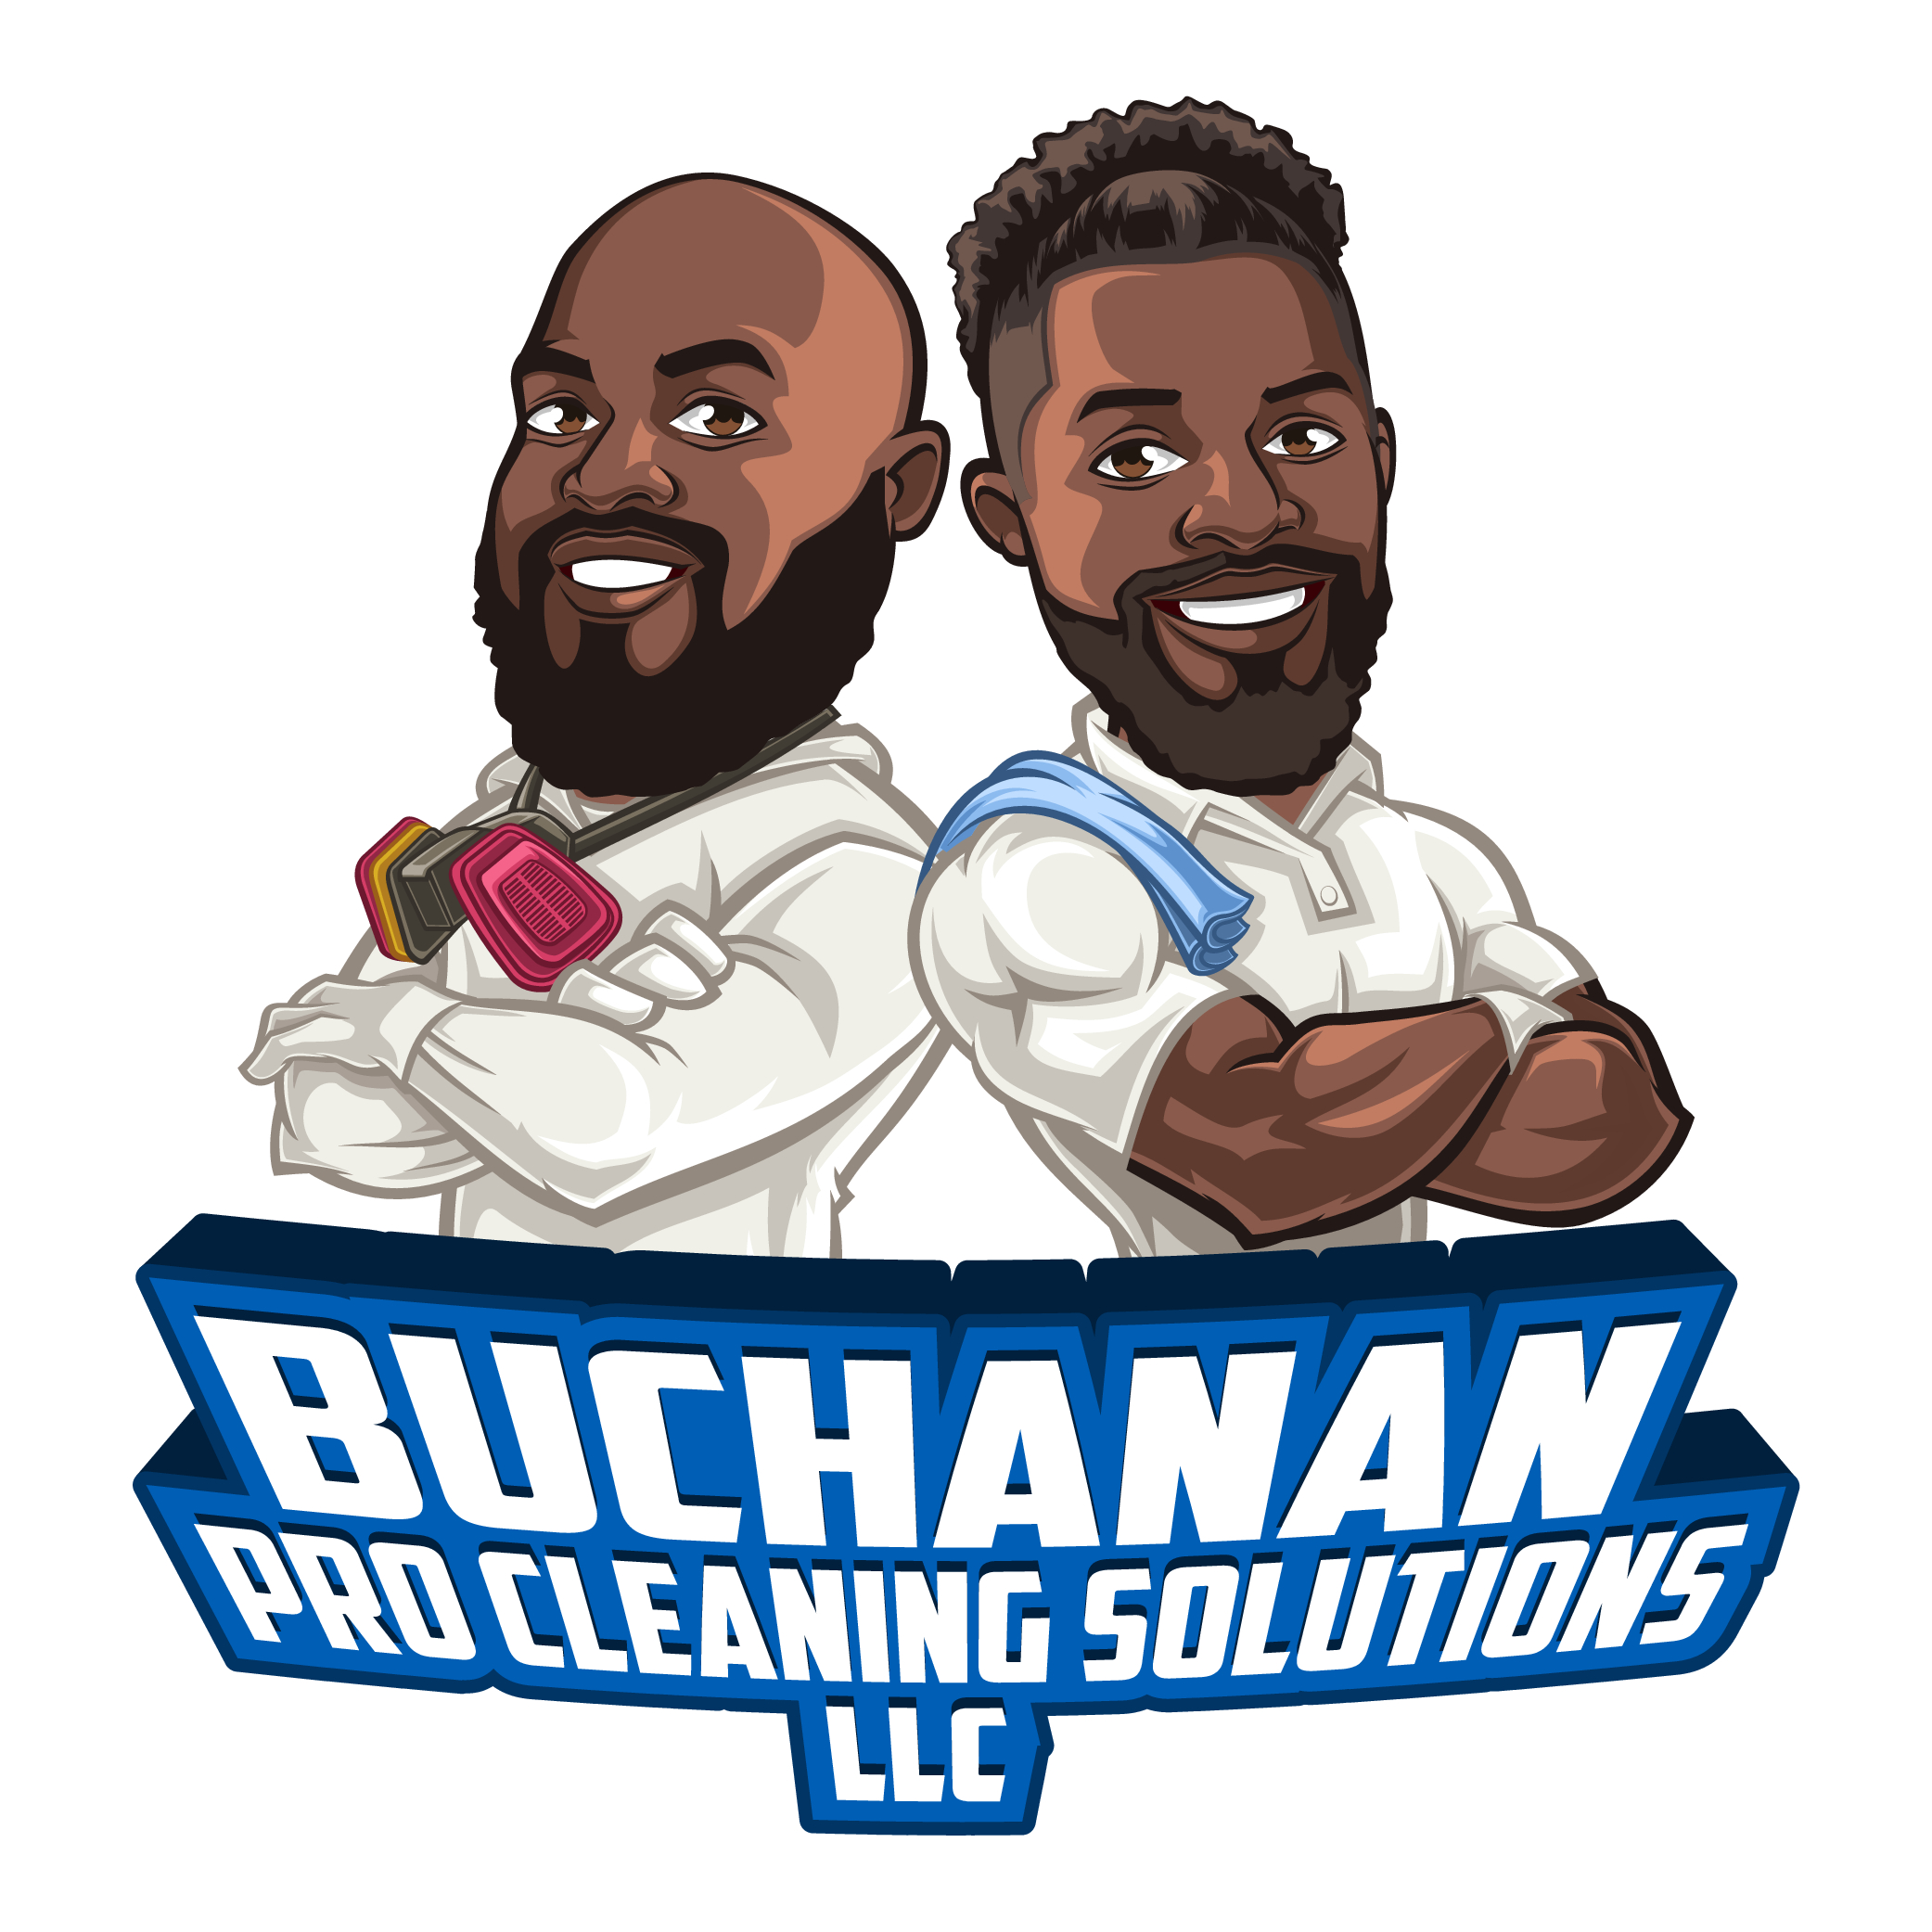 Buchanan Pro Cleaning Solutions LLC